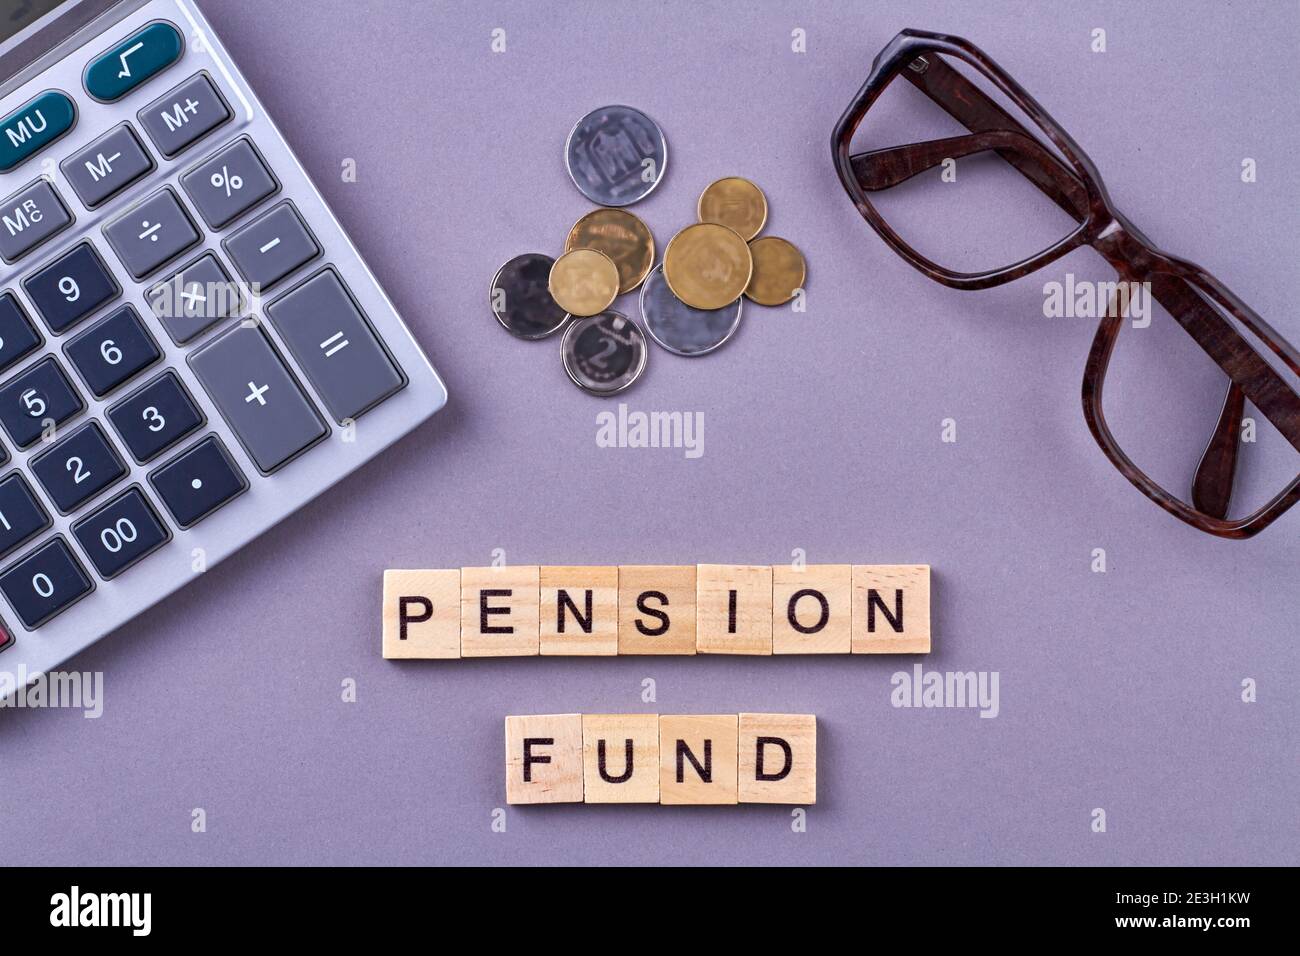 Pension fund concept. Stock Photo